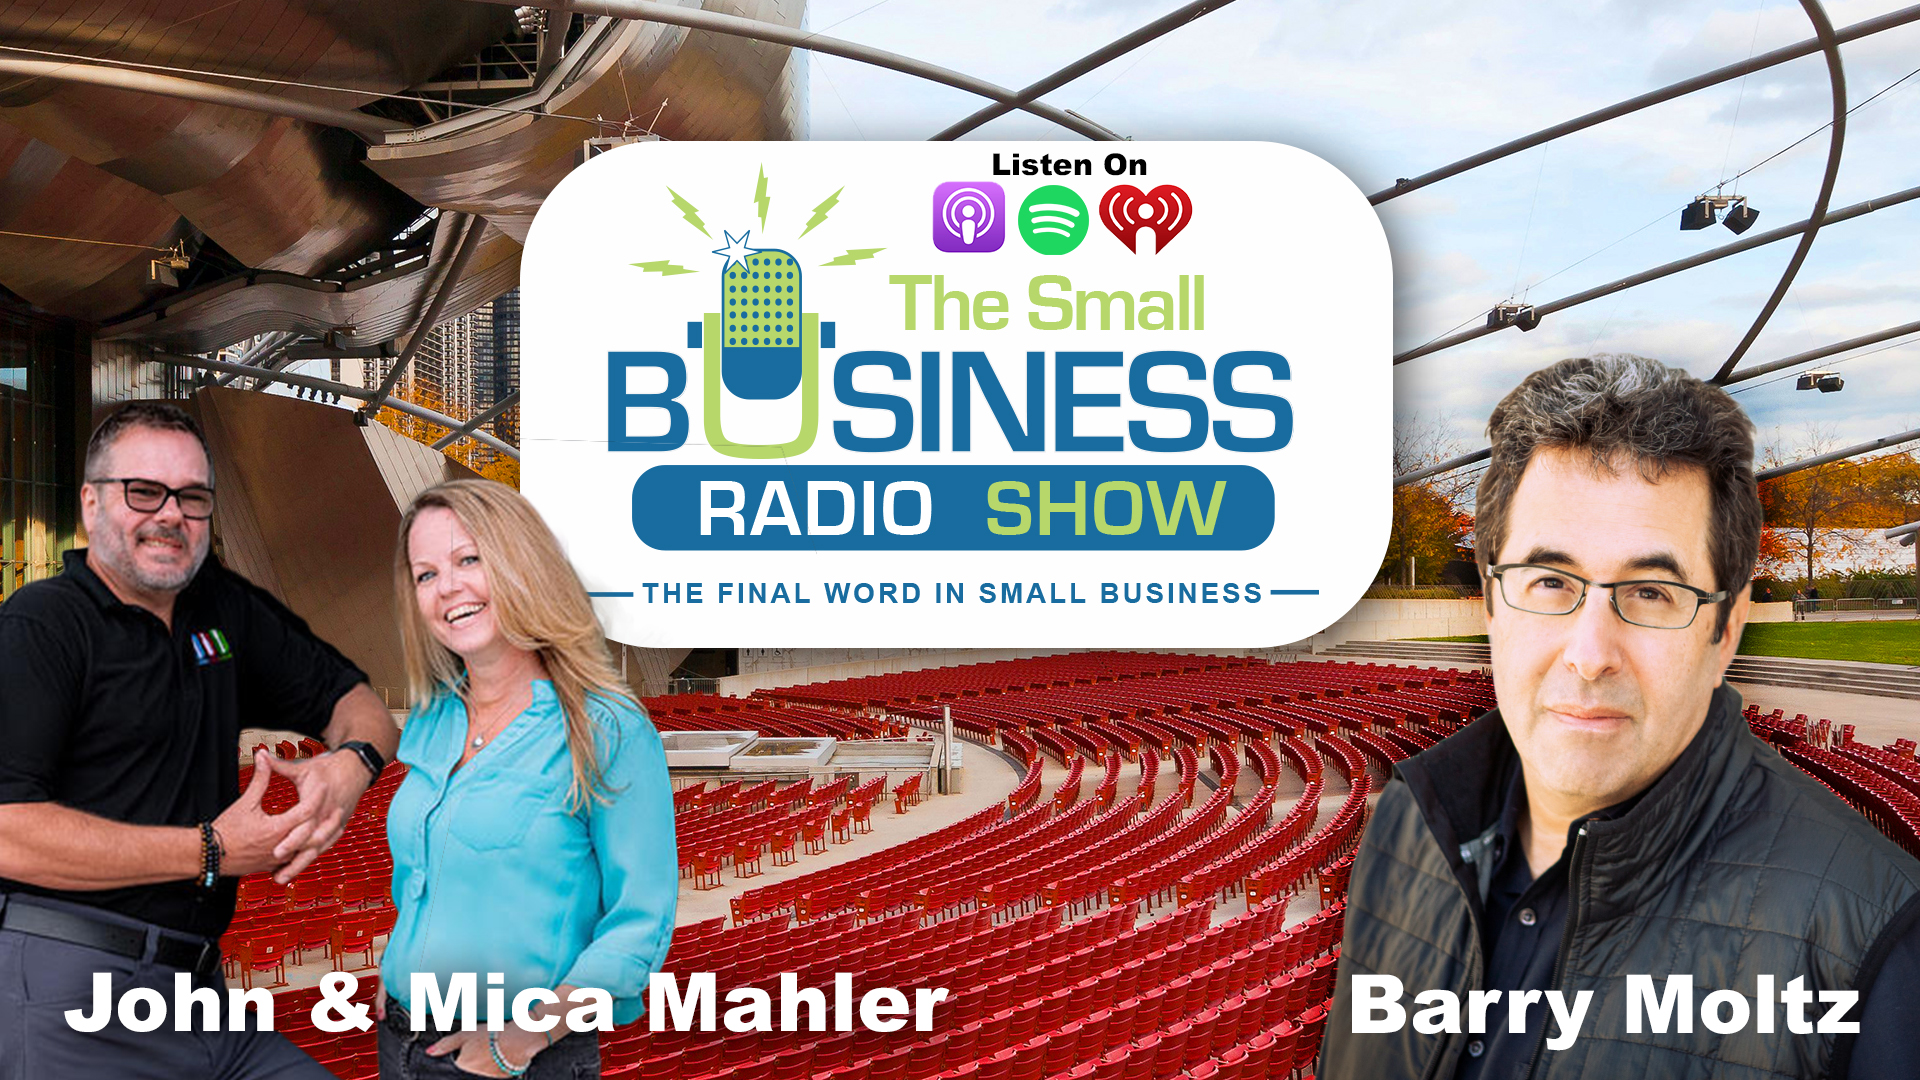 John & Mica Mahler on The Small Business Radio Show